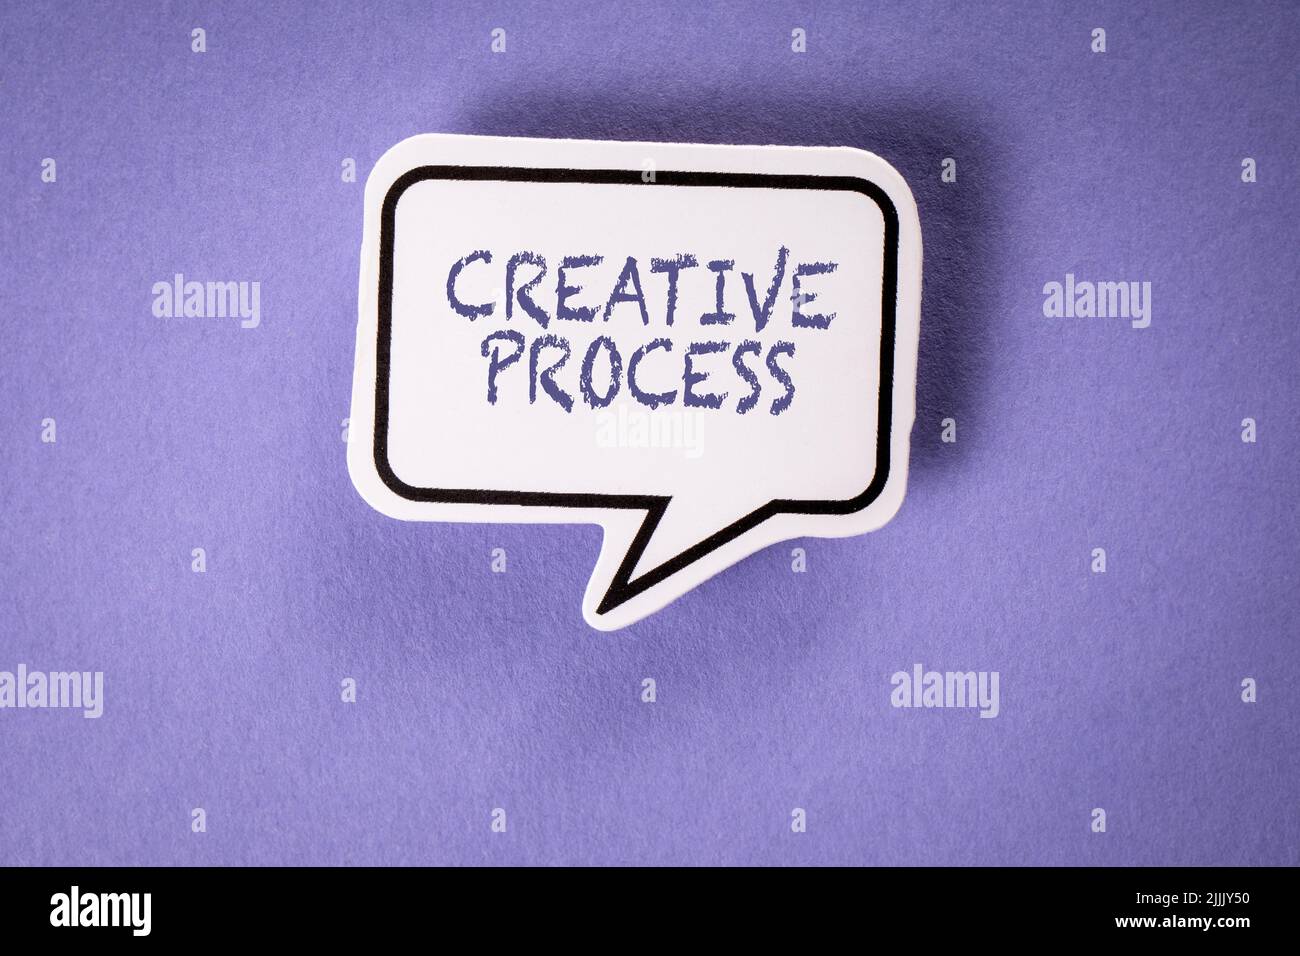 Creative Process. Speech bubble on purple background. Stock Photo